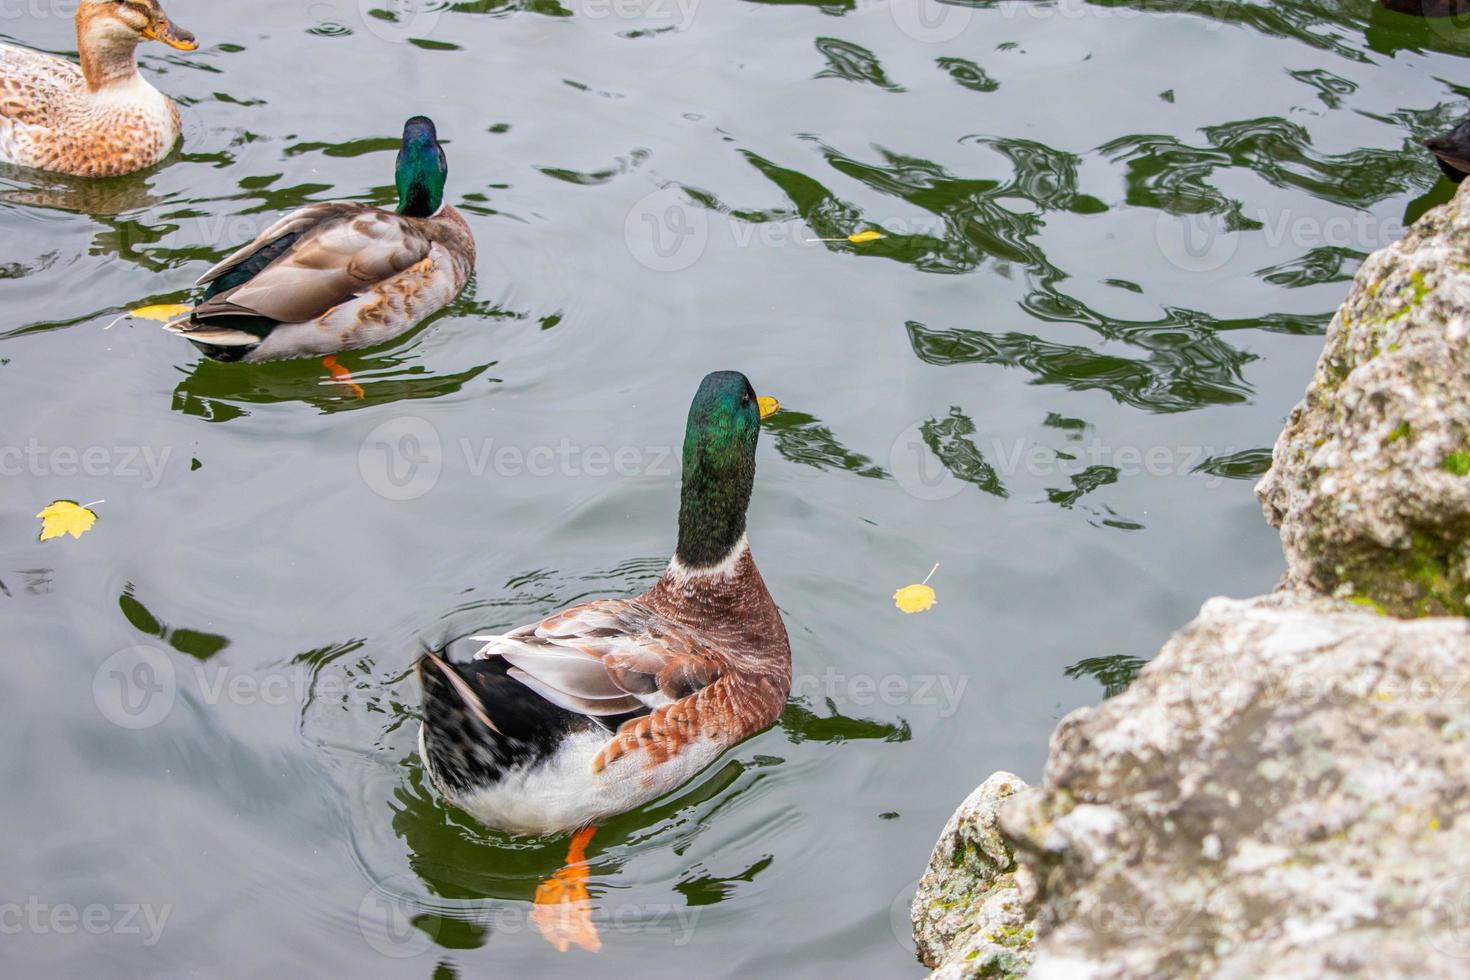 Anas platyrhynchos - duck swimming in water pond photo